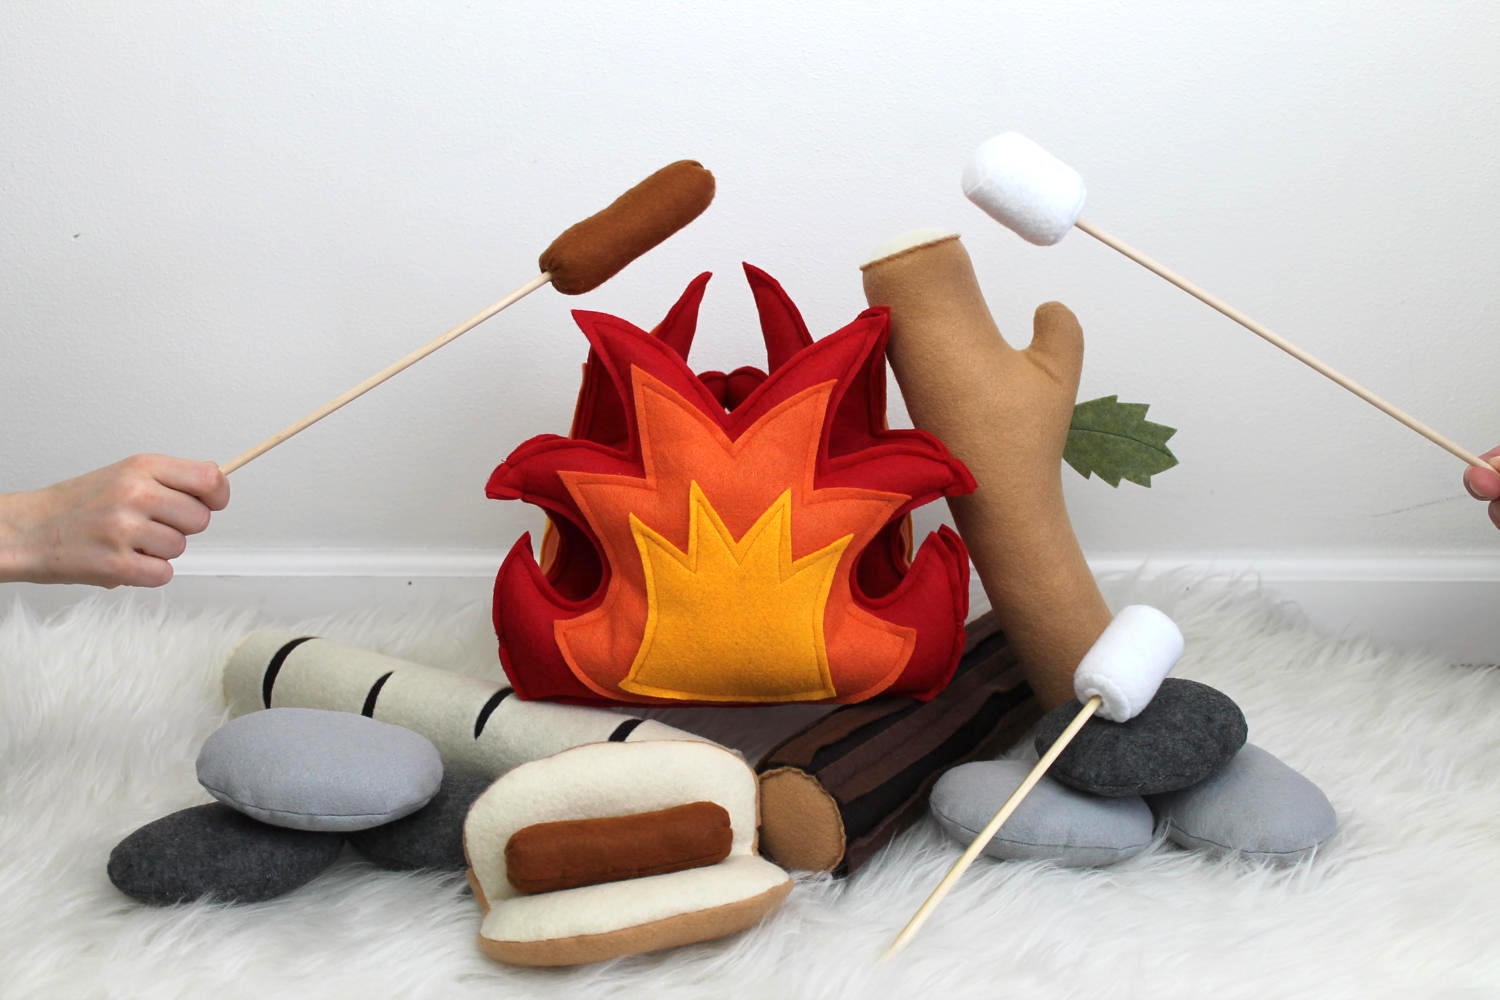 Handmade toys for kids: Felt handmade campfire playset by The Homespun Market